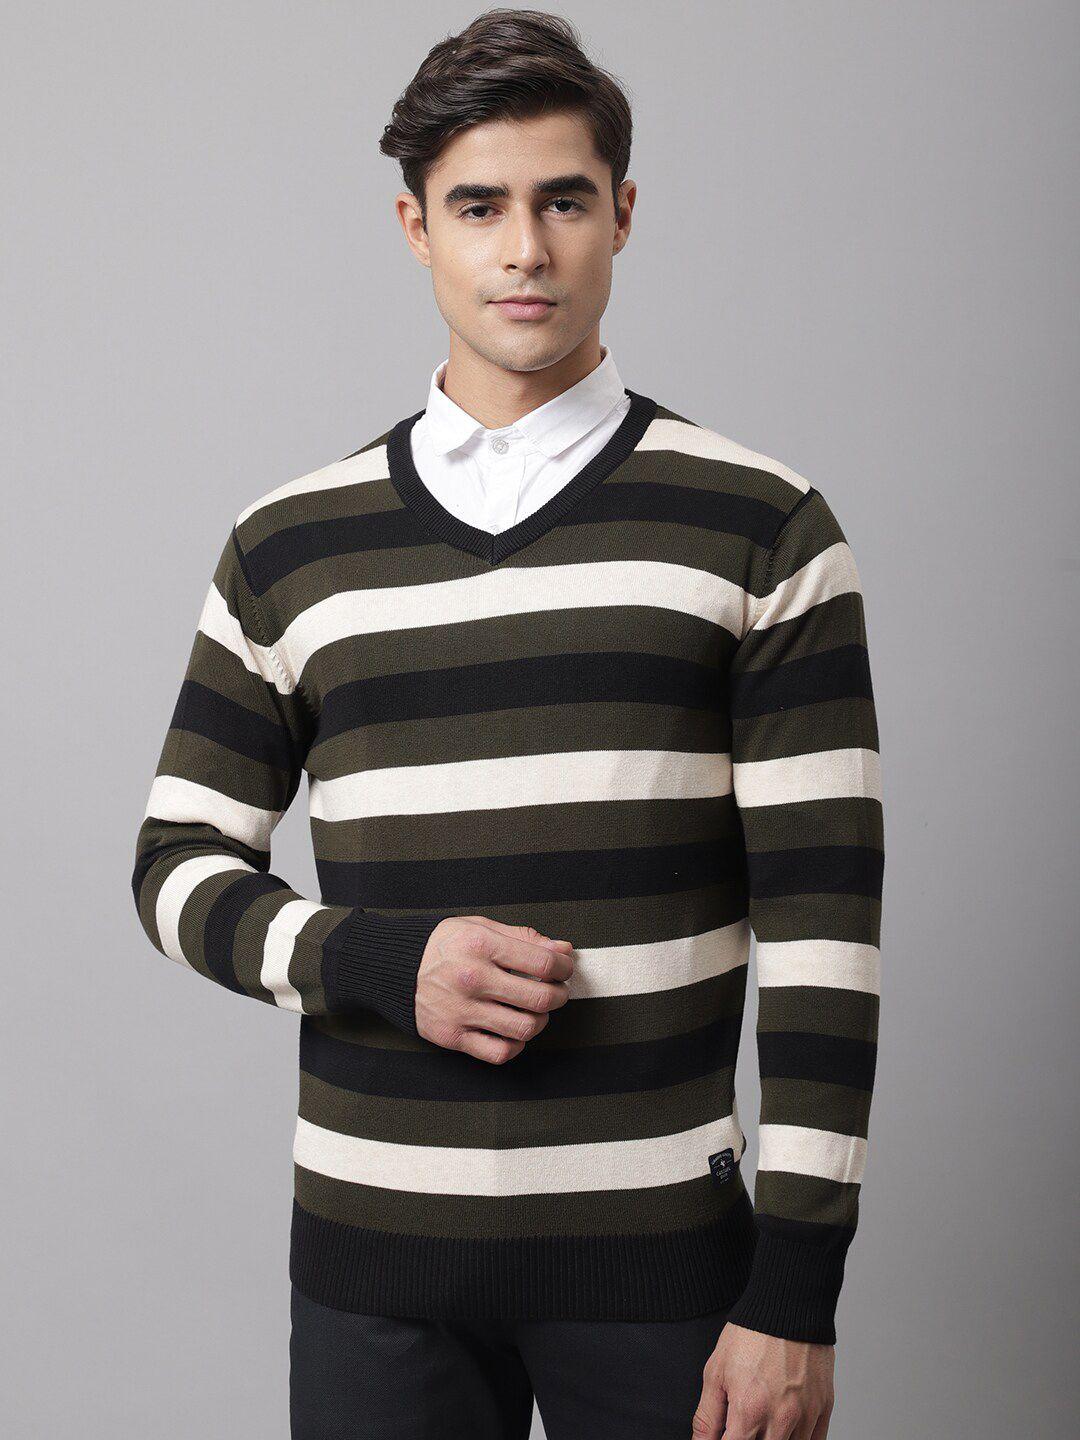 cantabil men olive green & white striped cotton pullover sweater